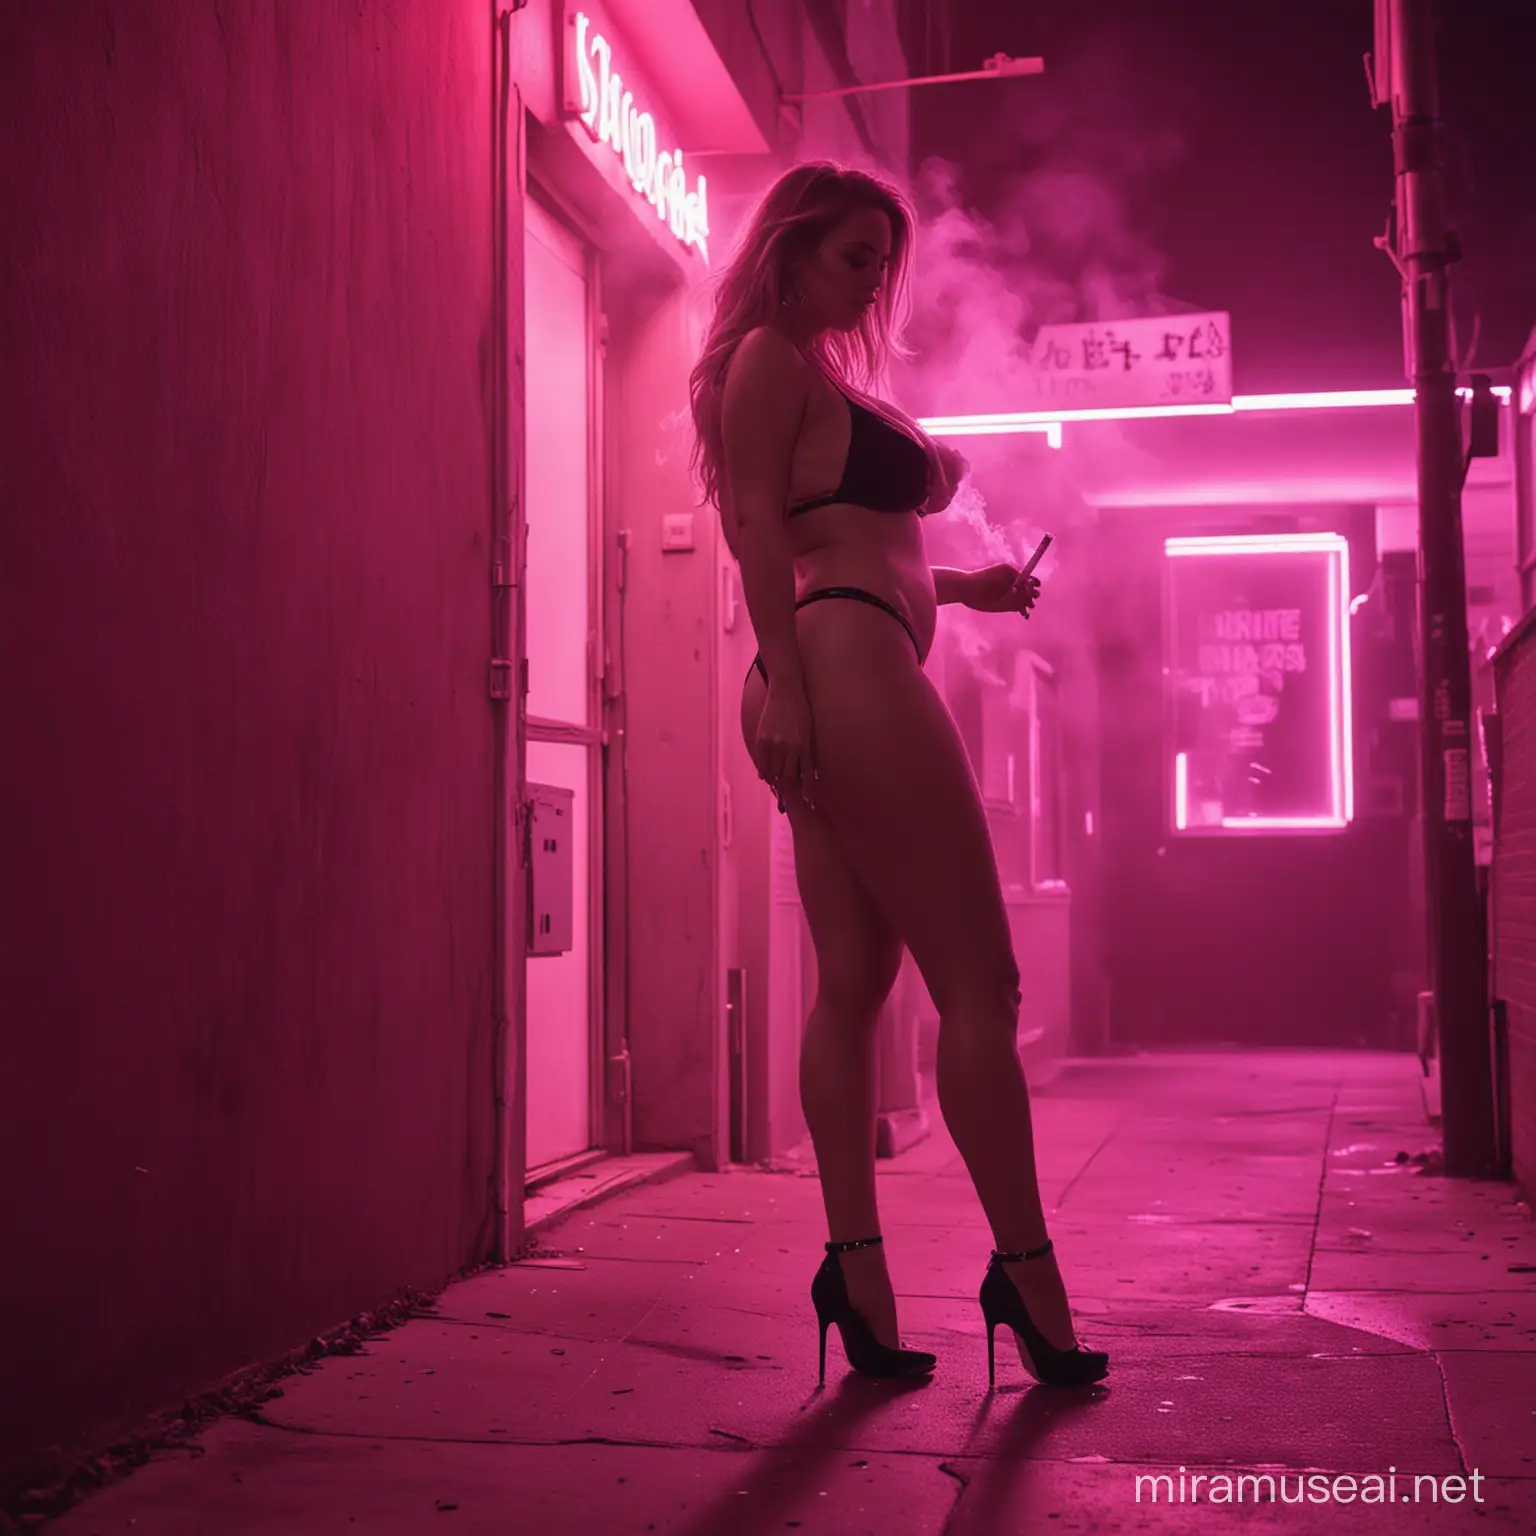 brothel, thick thigh woman wearing bikini and heels walking around smoking cigarette, pink neon low lighting ambience, nighttime ambience,